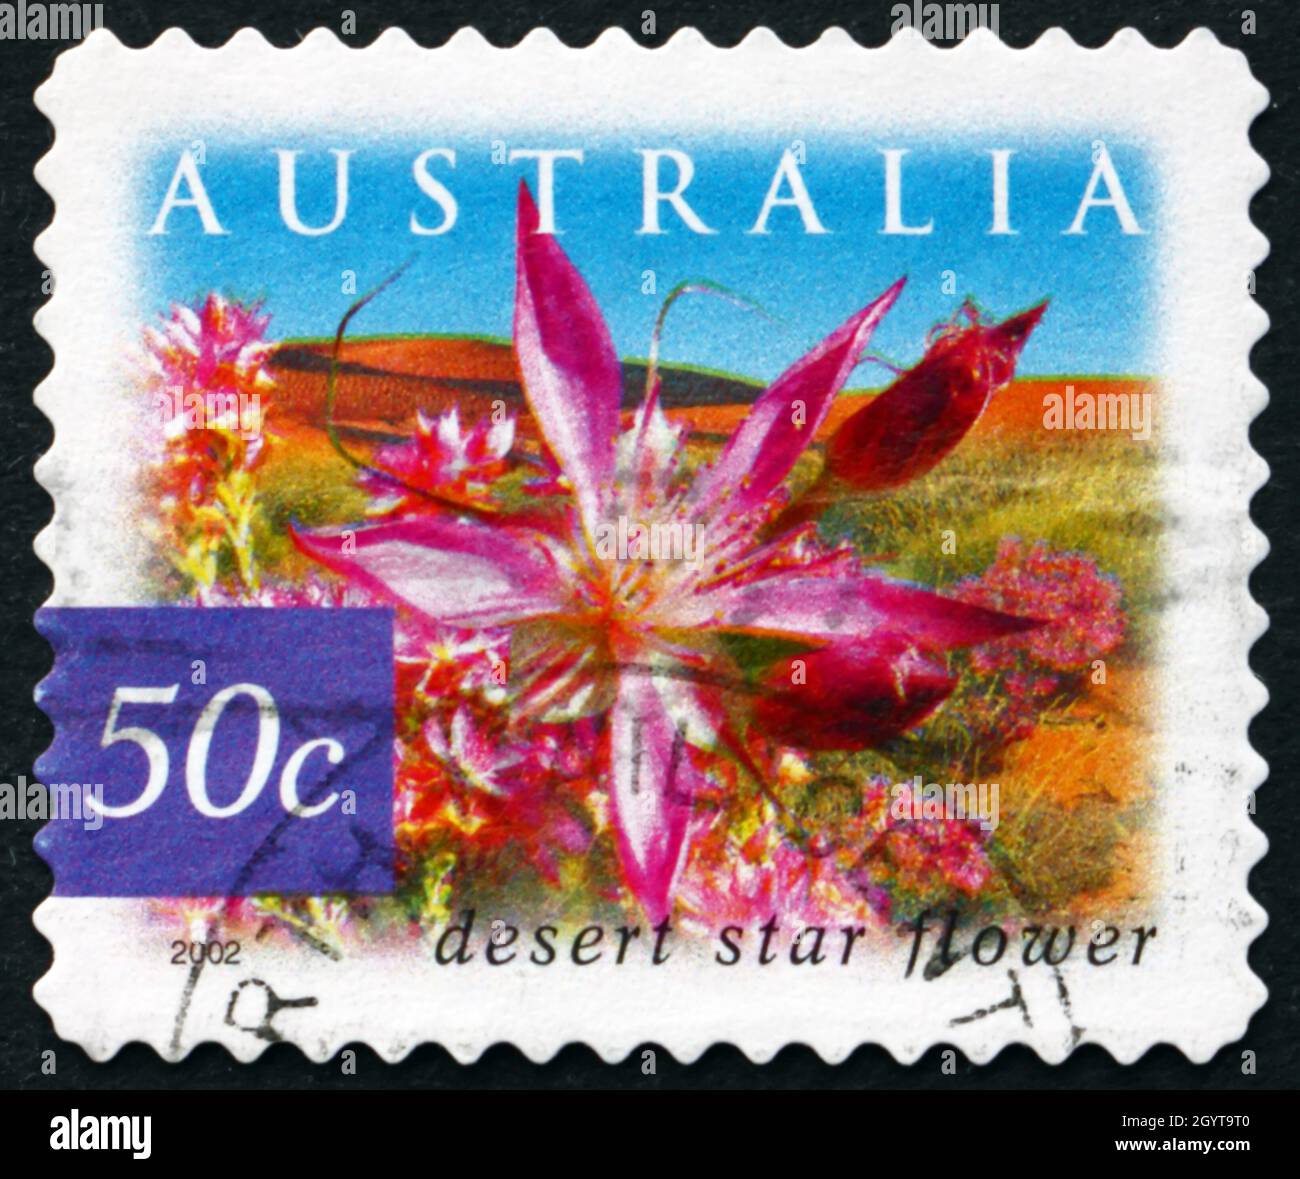 AUSTRALIA - CIRCA 2002: a stamp printed in Australia shows Desert Star Flower, Calytrix Carinata, Flowering Shrub, circa 2002 Stock Photo